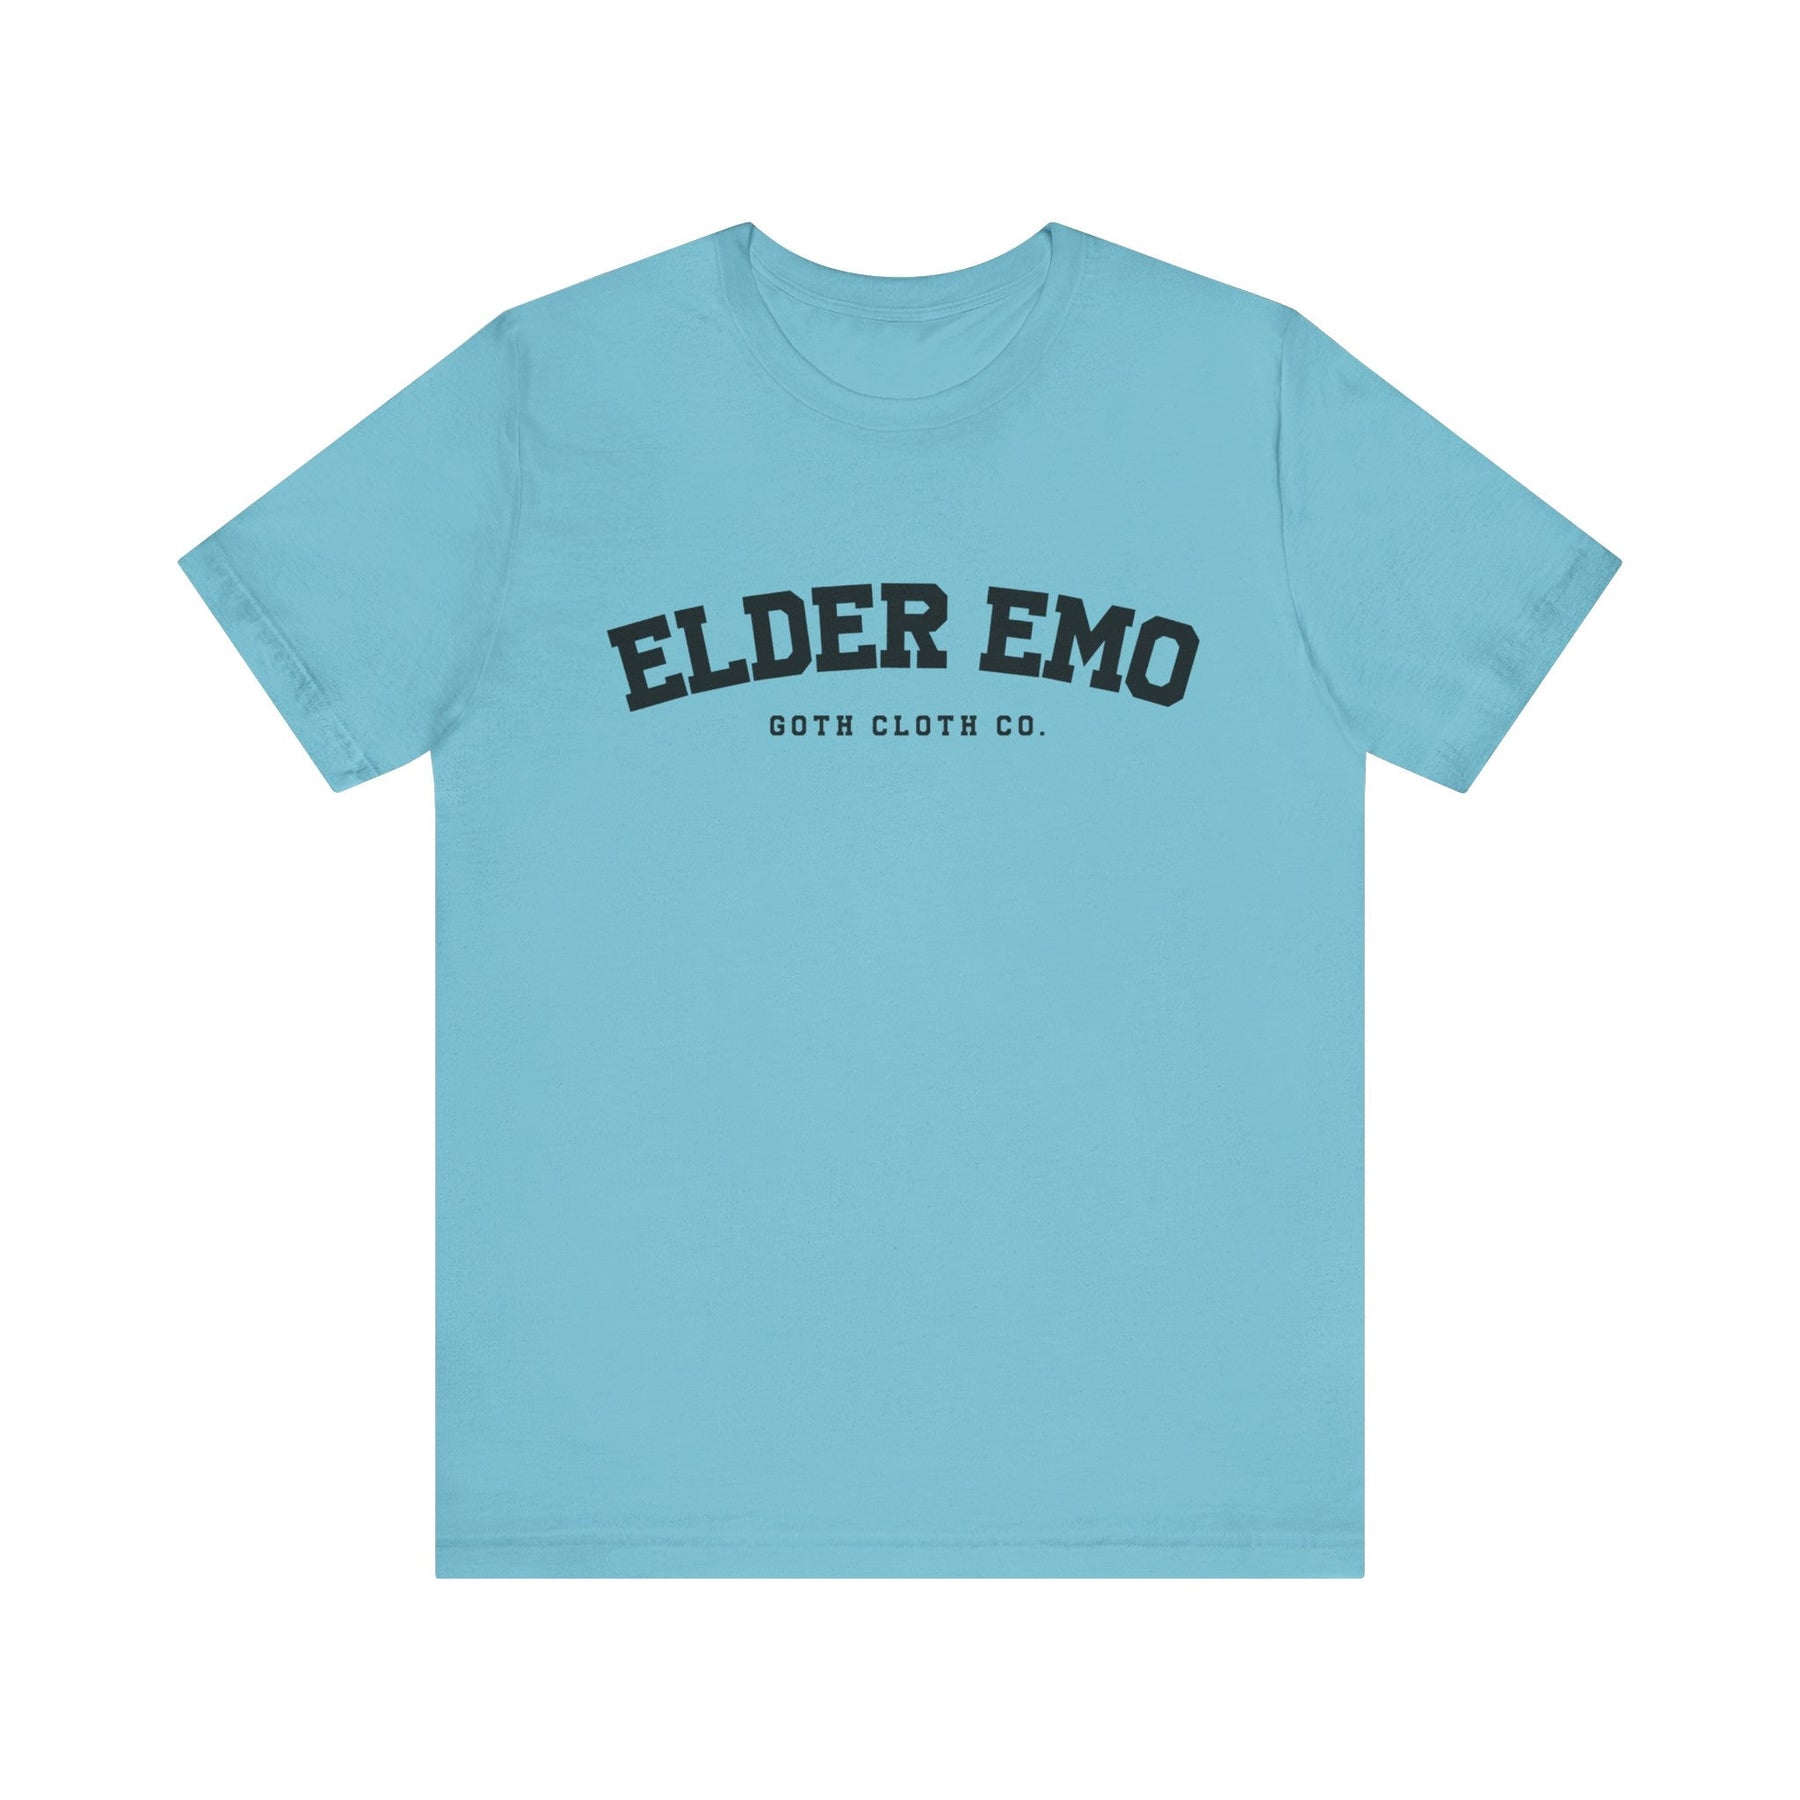 Elder Emo Short Sleeve Tee - Goth Cloth Co.T - Shirt23069722763128947615